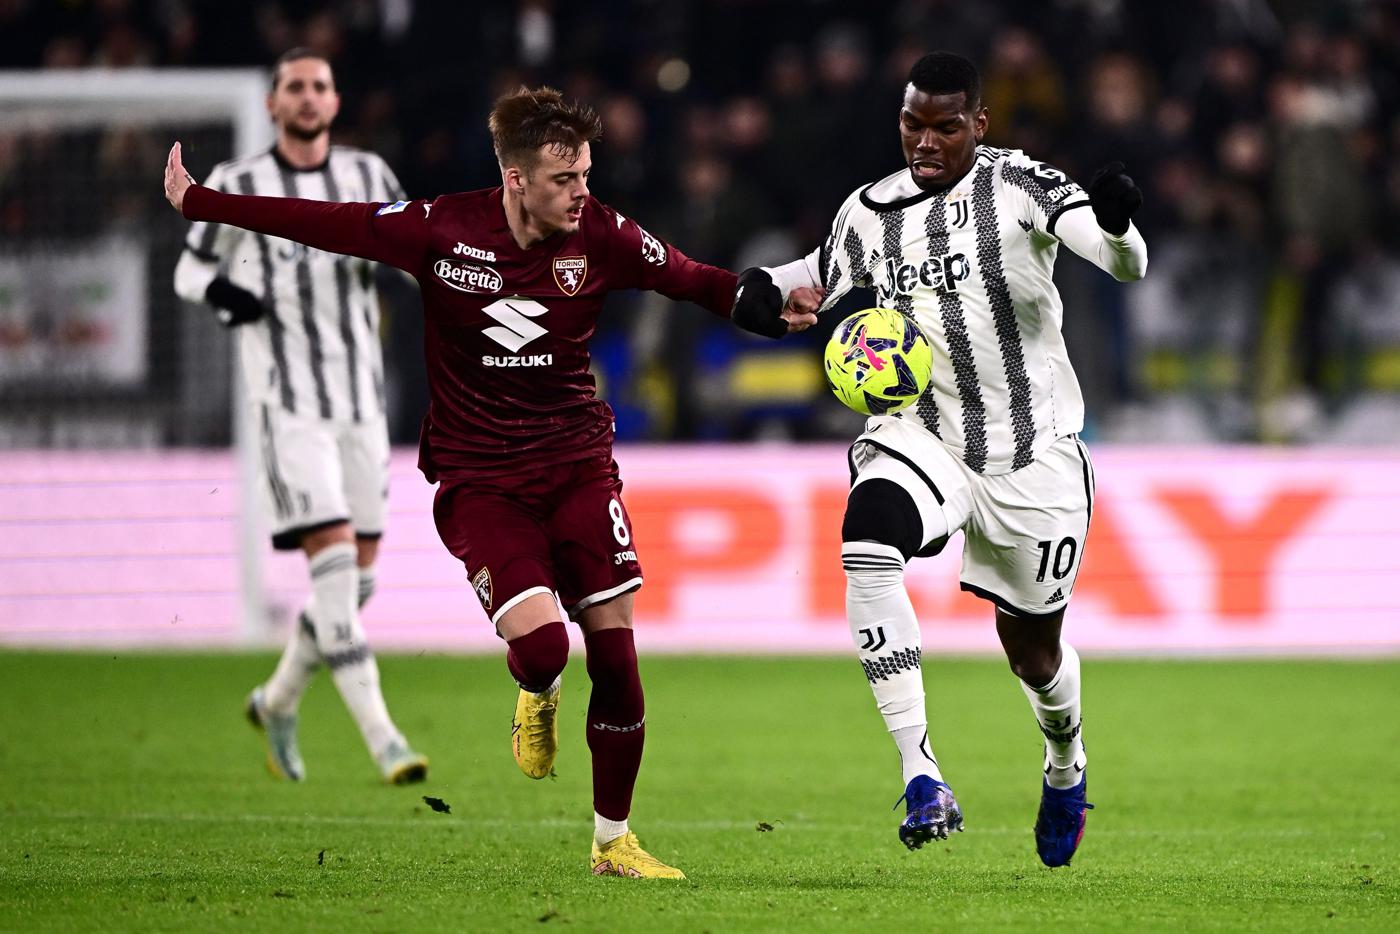 Juventus - Torino - 4:2. Italian Championship, round 24. Match Review, Statistics